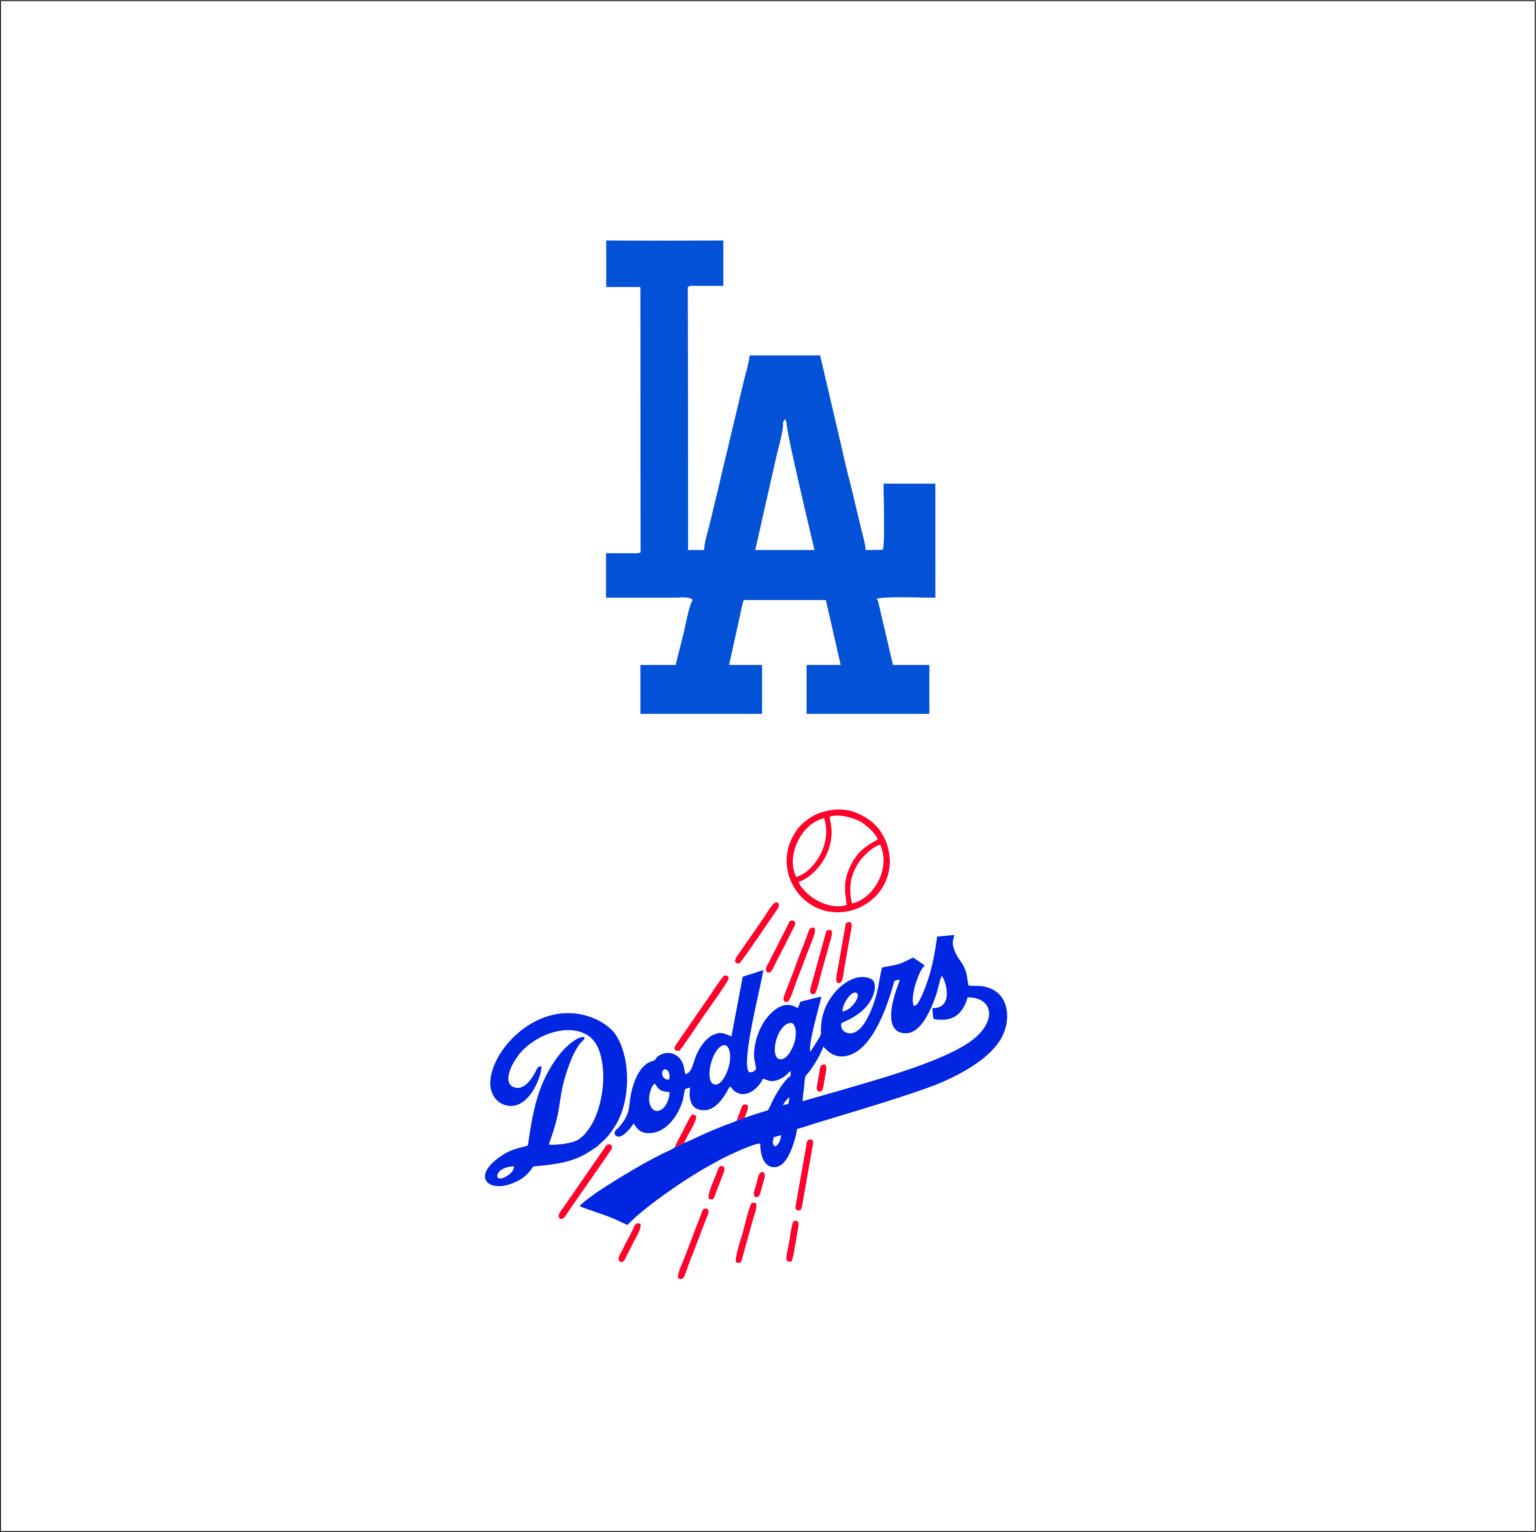 Los Angeles Dodgers team